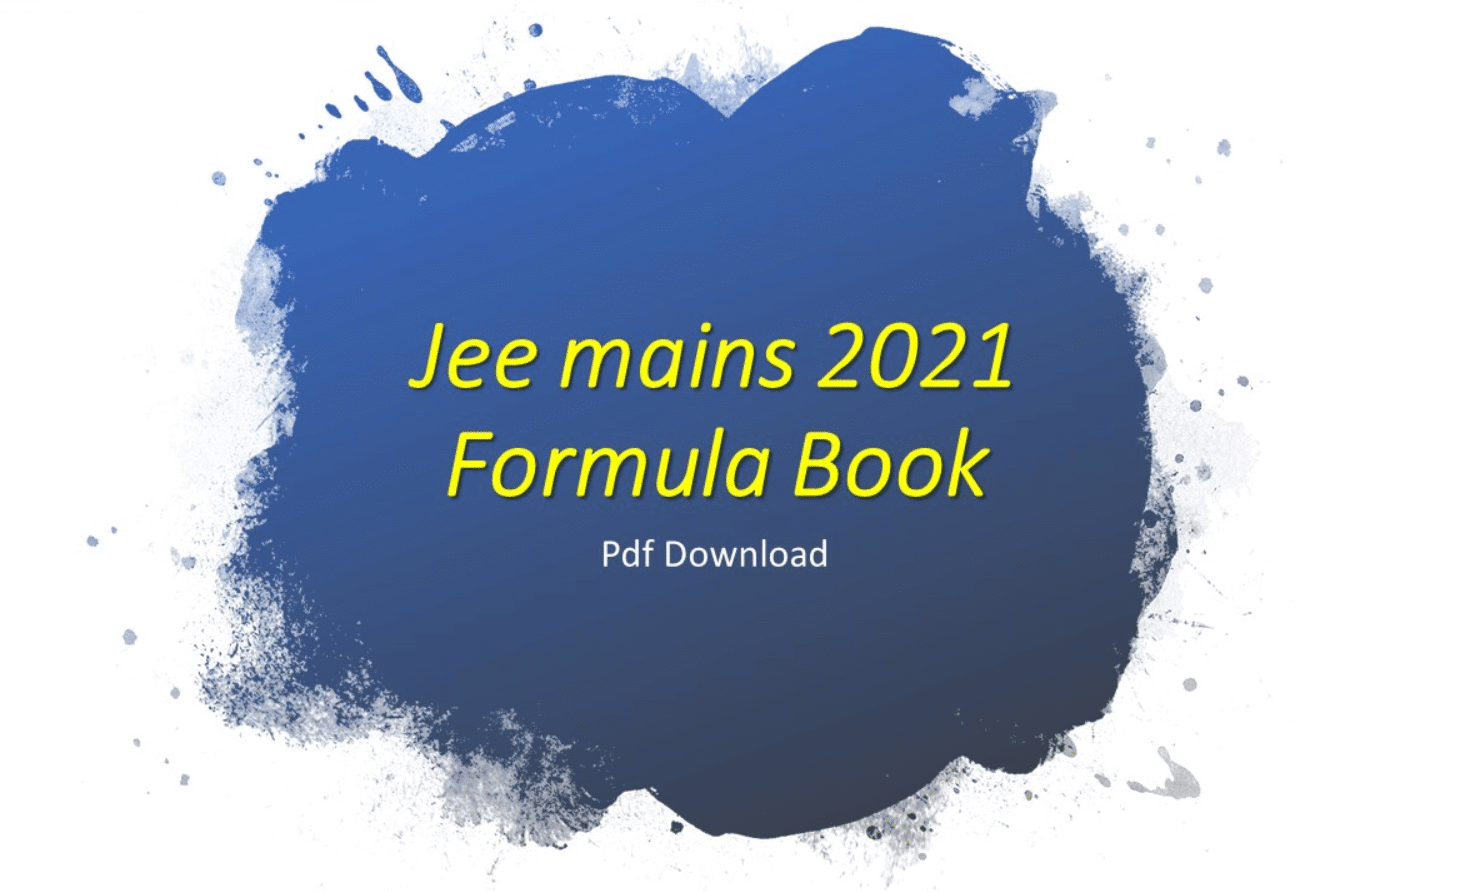 jee mains 2021 formula book pdf